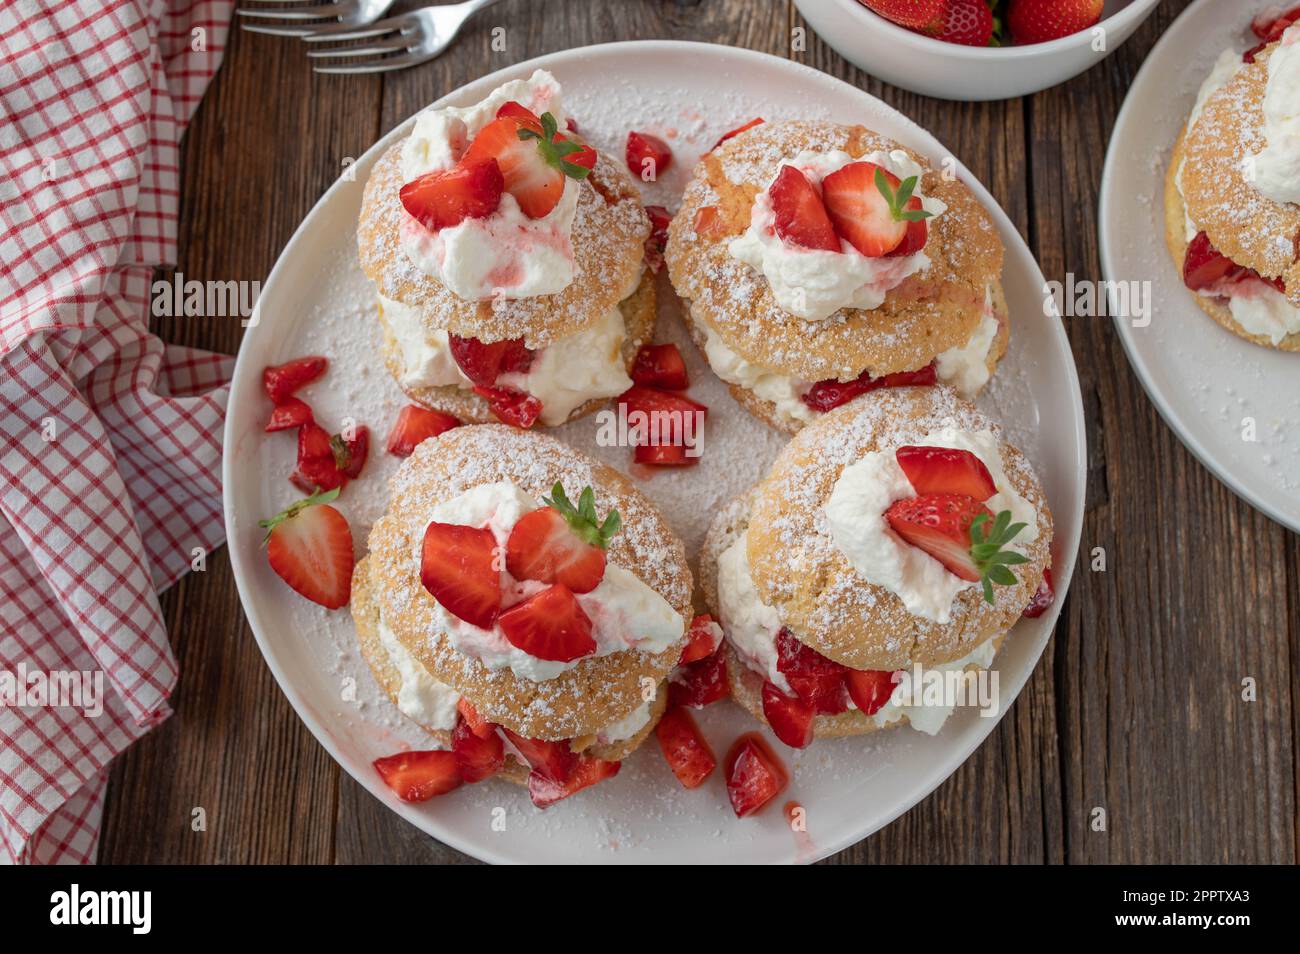 Strawberry shortcake on wooden table Stock Photo